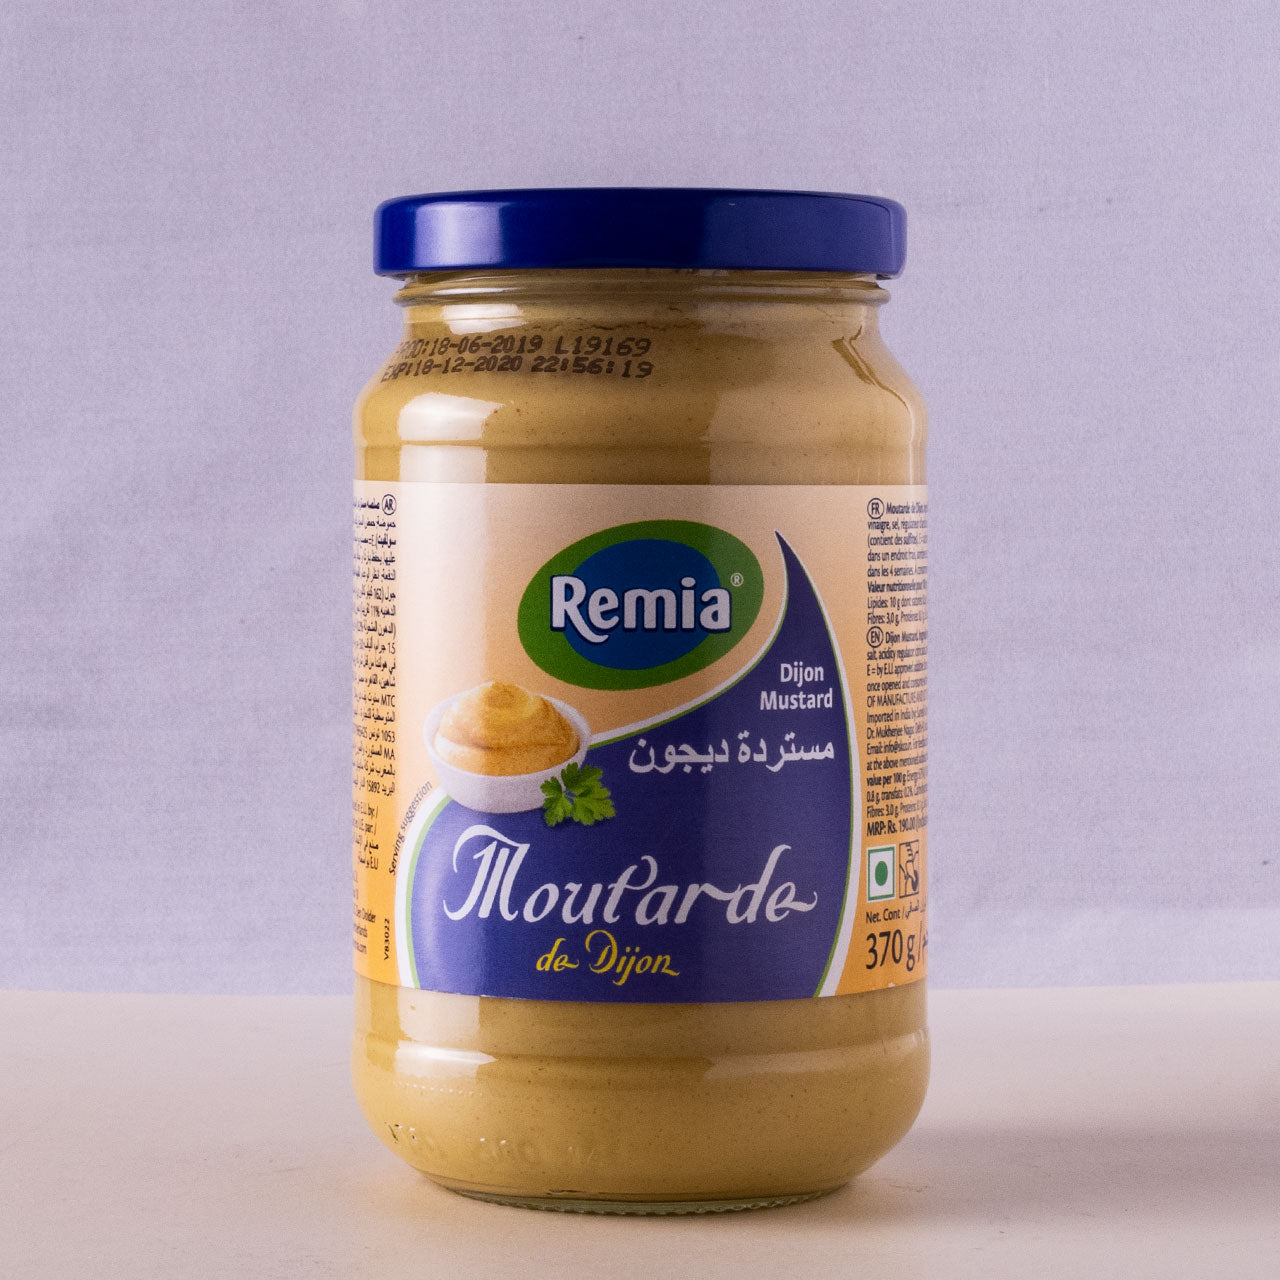 Remia Dijon Mustard